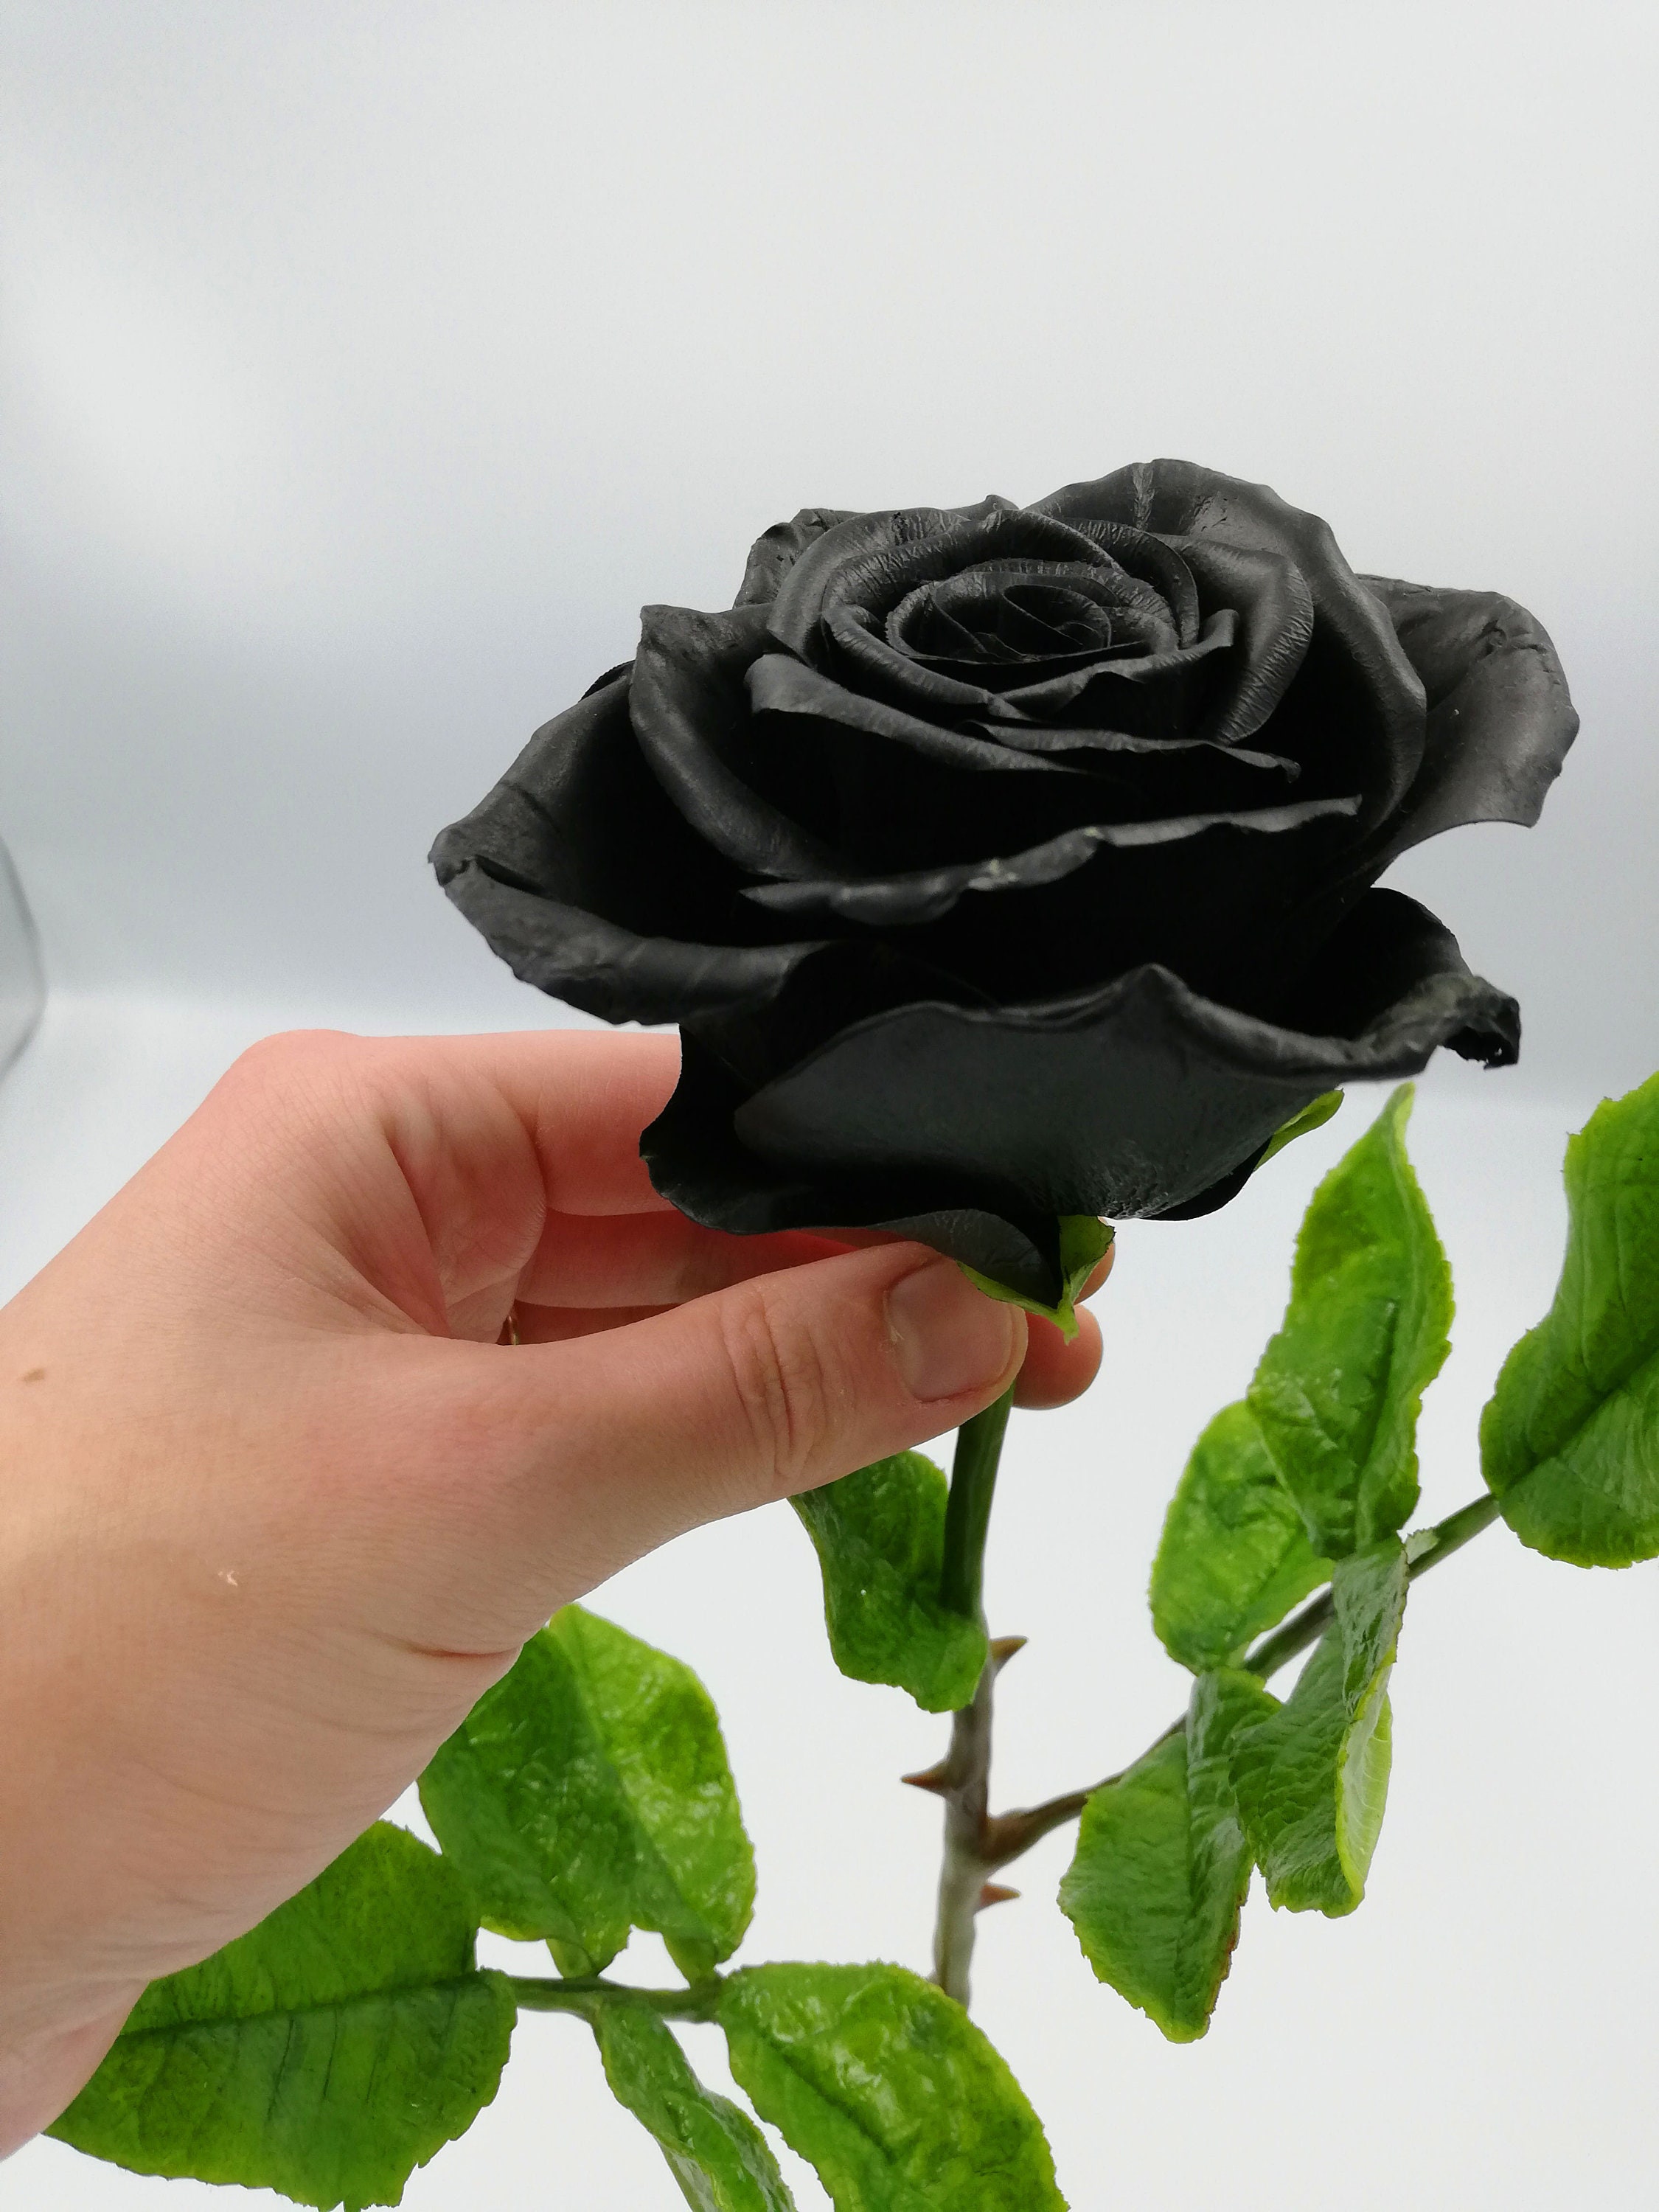 100 BLACK ROSE ideas  black rose, black flowers, rose